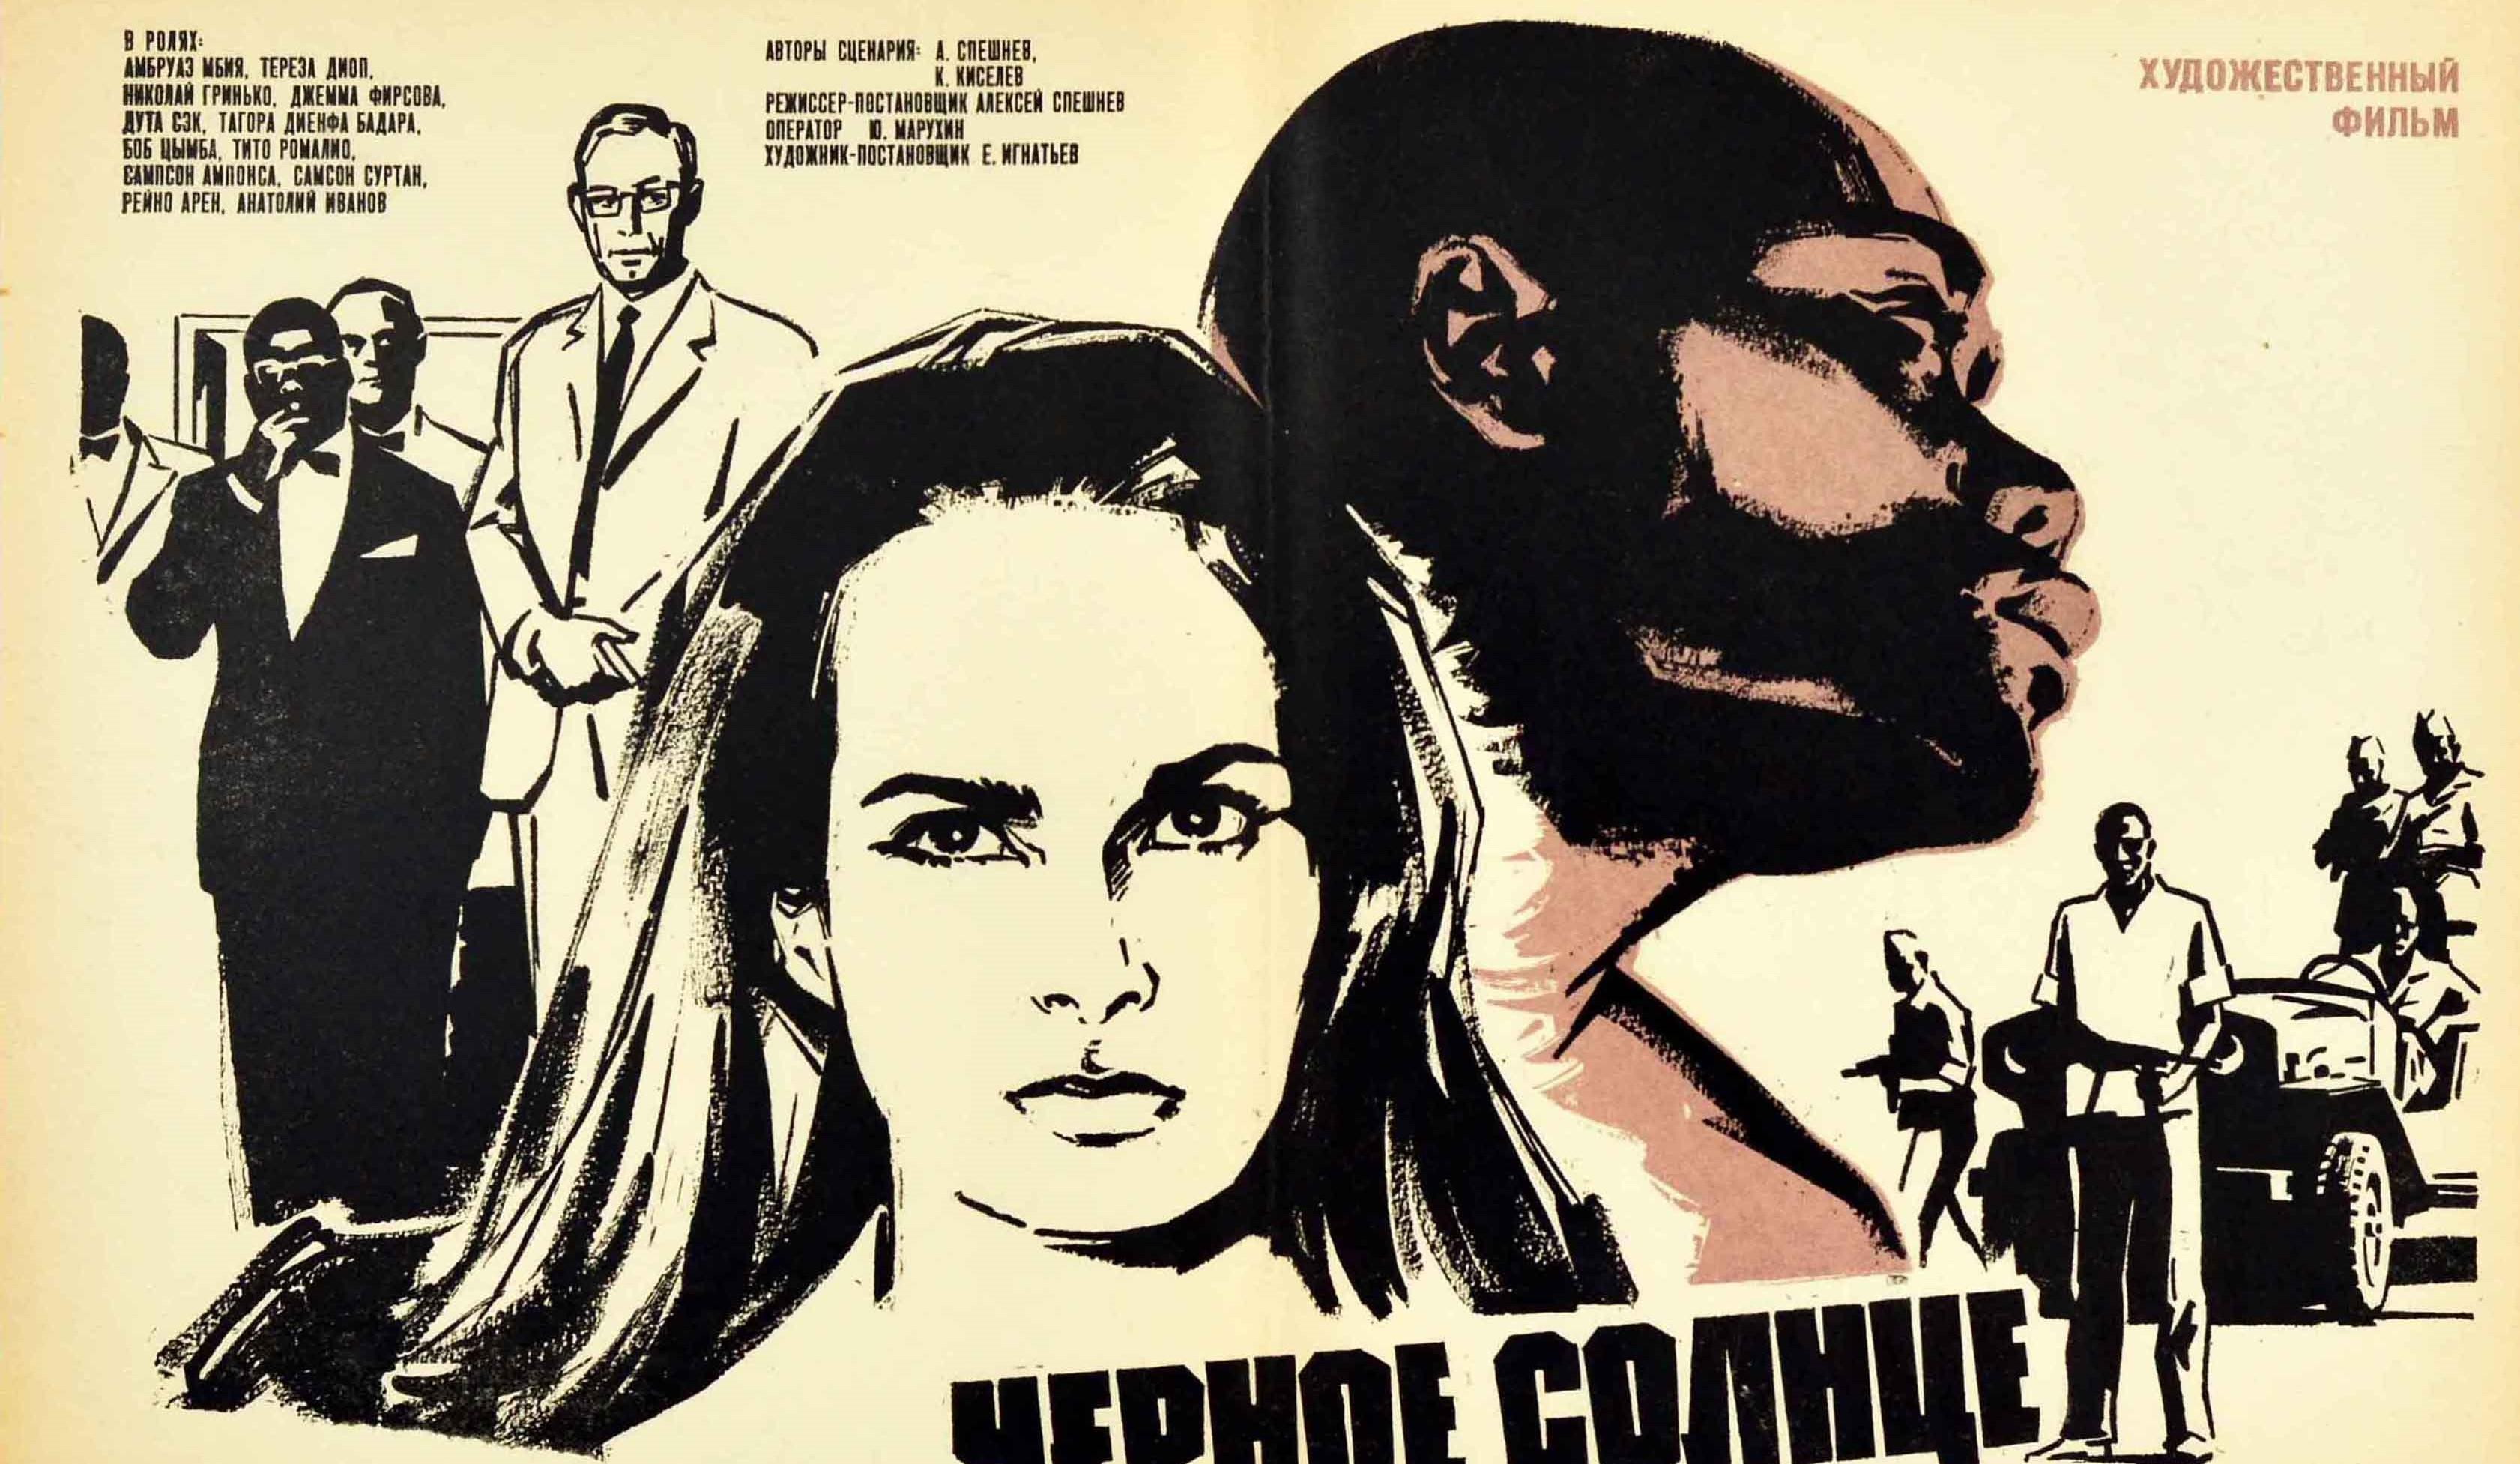 Original Vintage Film Poster Black Sun Congo Africa Political Drama Movie USSR - Print by Homov